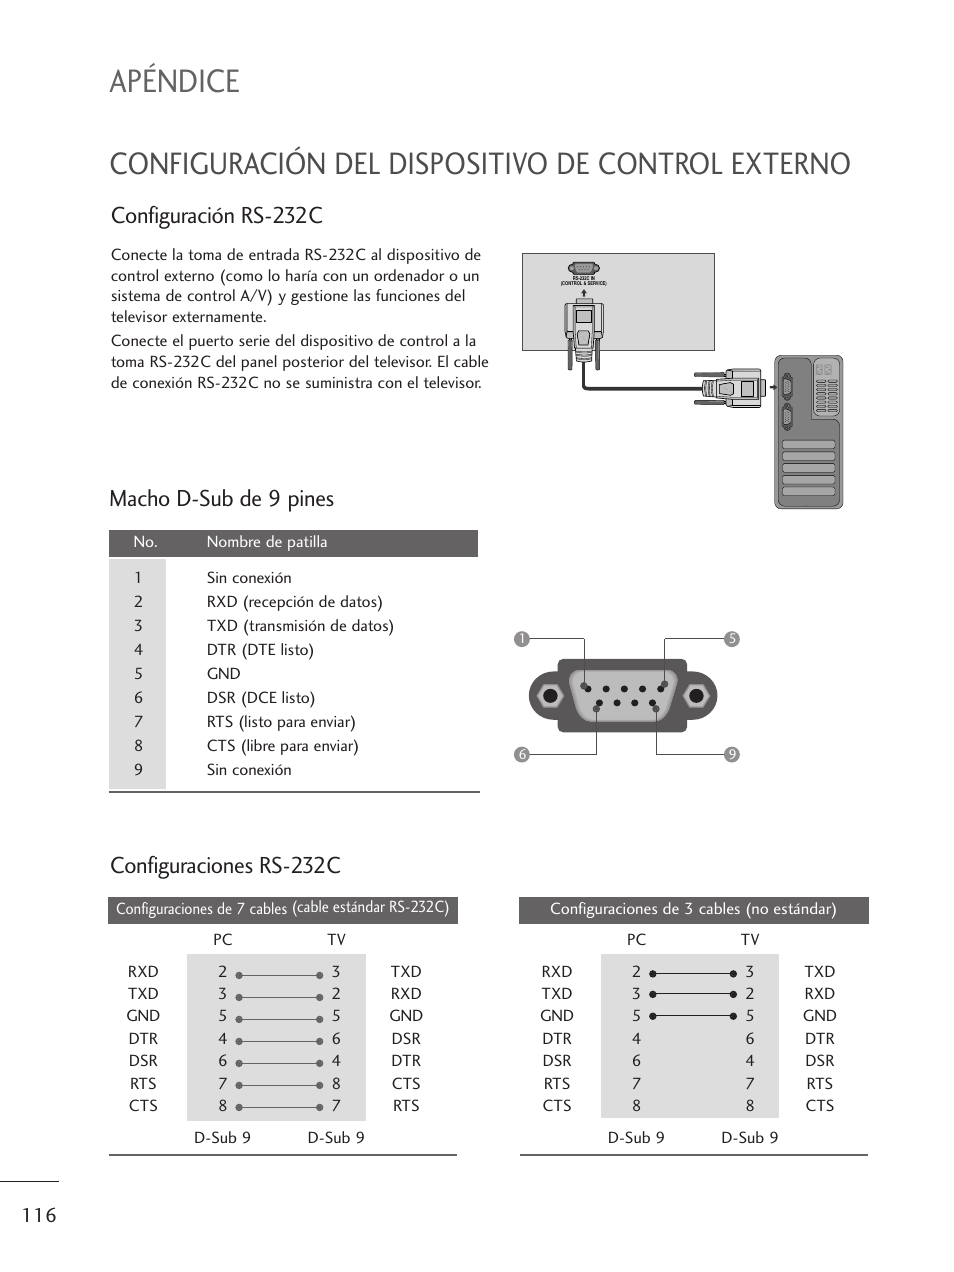 Configuración del dispositivo de control externo, Configuración rs-232c, Macho d-sub de 9 pines | Apéndice, Configuraciones rs-232c | LG M1962D-PZ Manual del usuario | Página 118 / 124